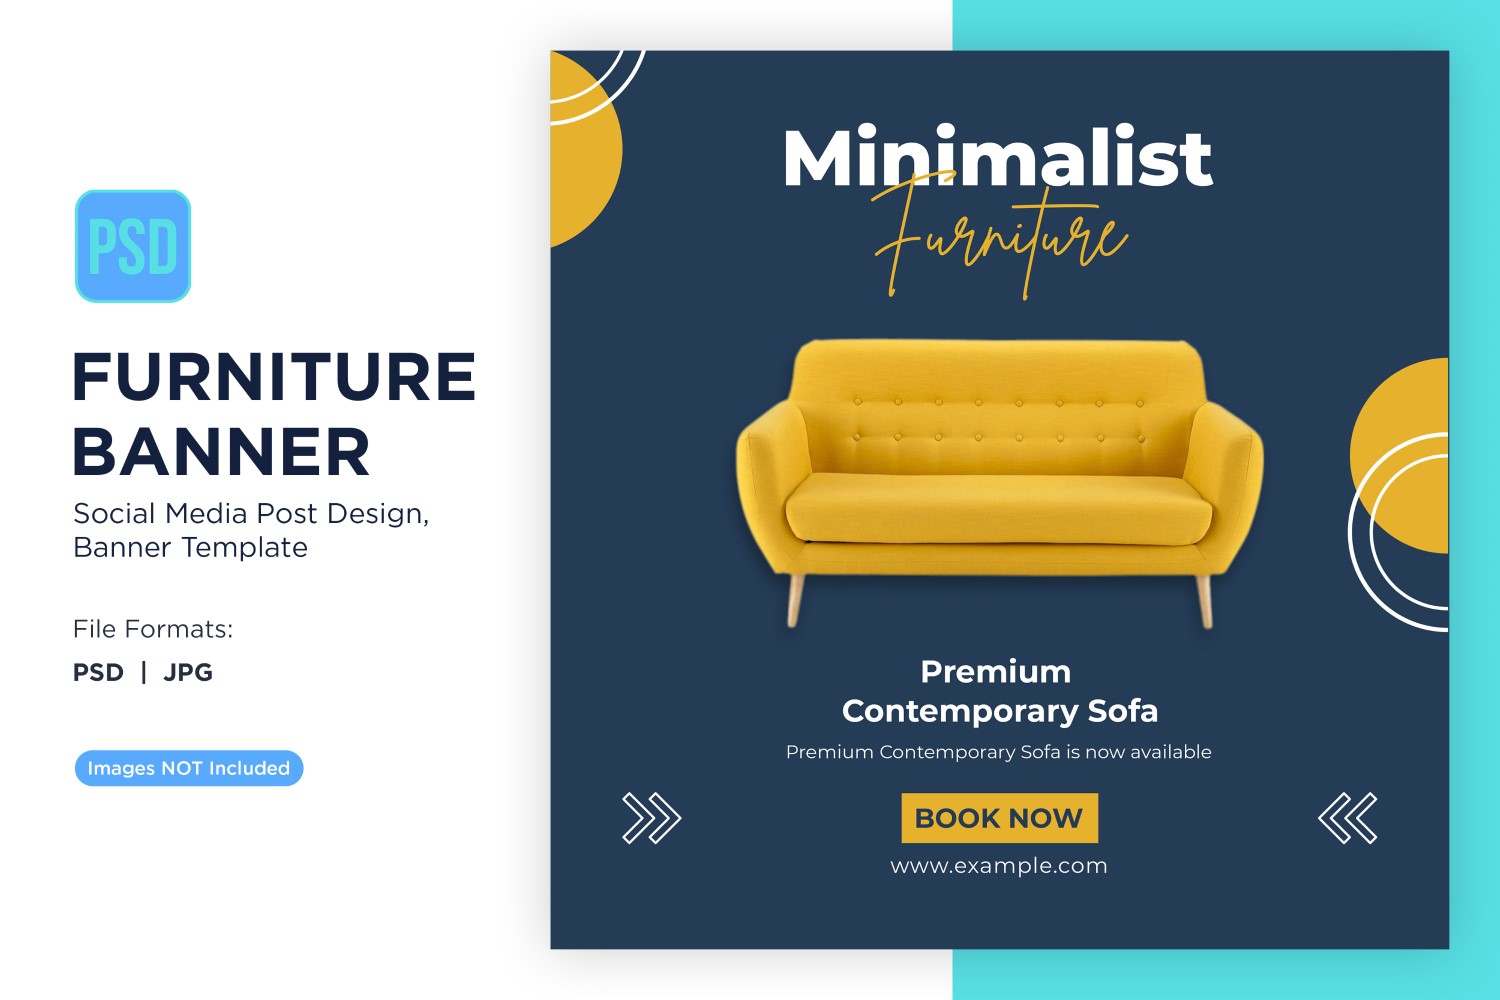 Minimalist Furniture Banner Design Template